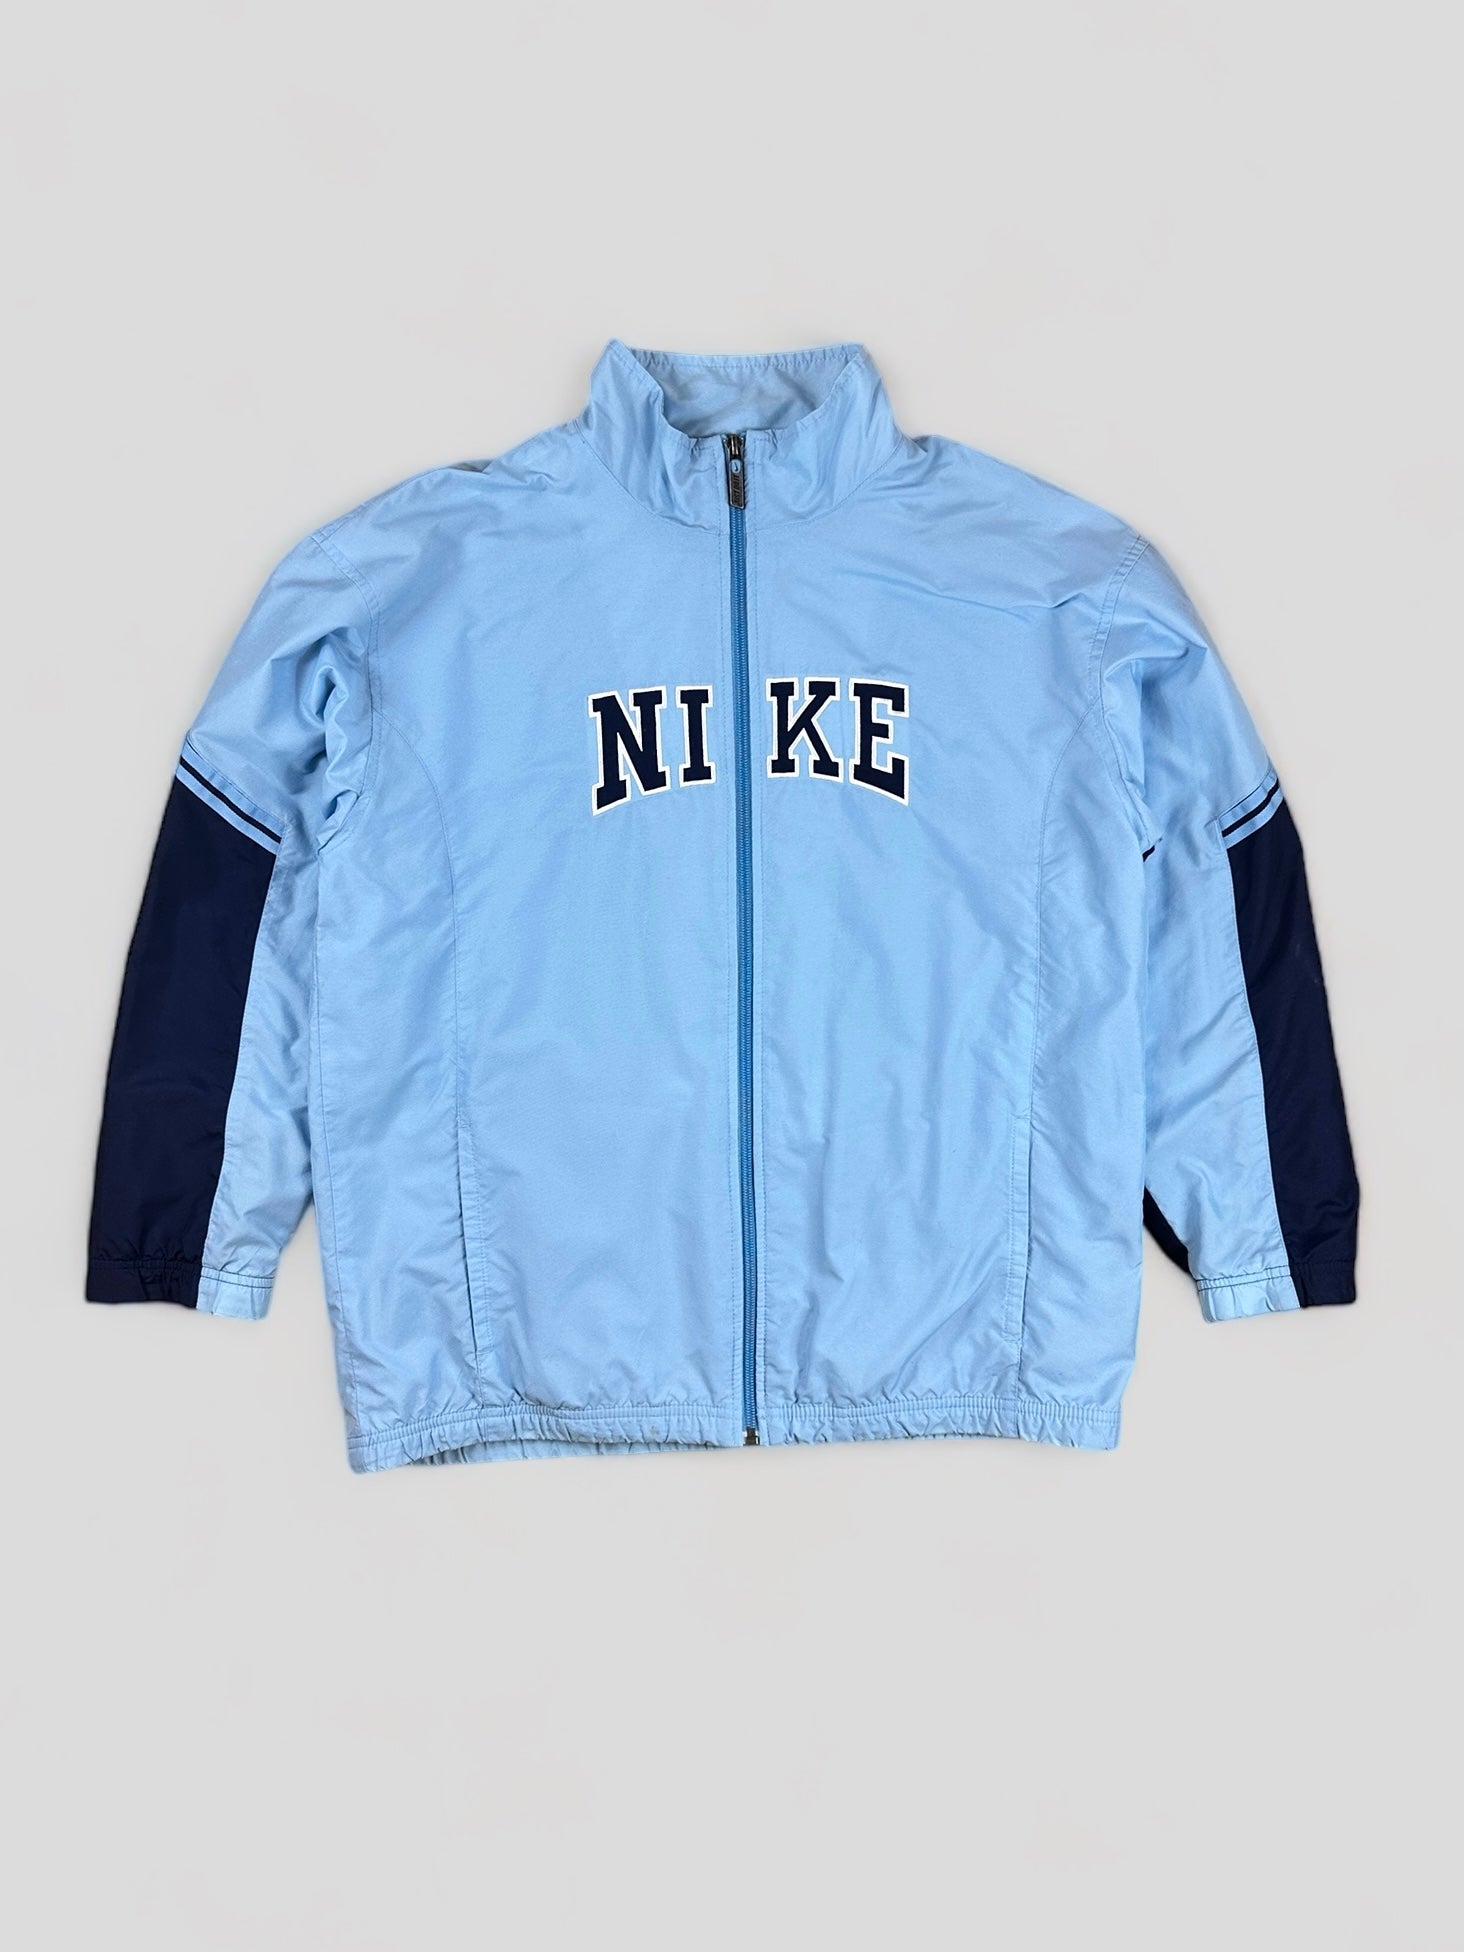 Vintage 00s nike blue track jacket